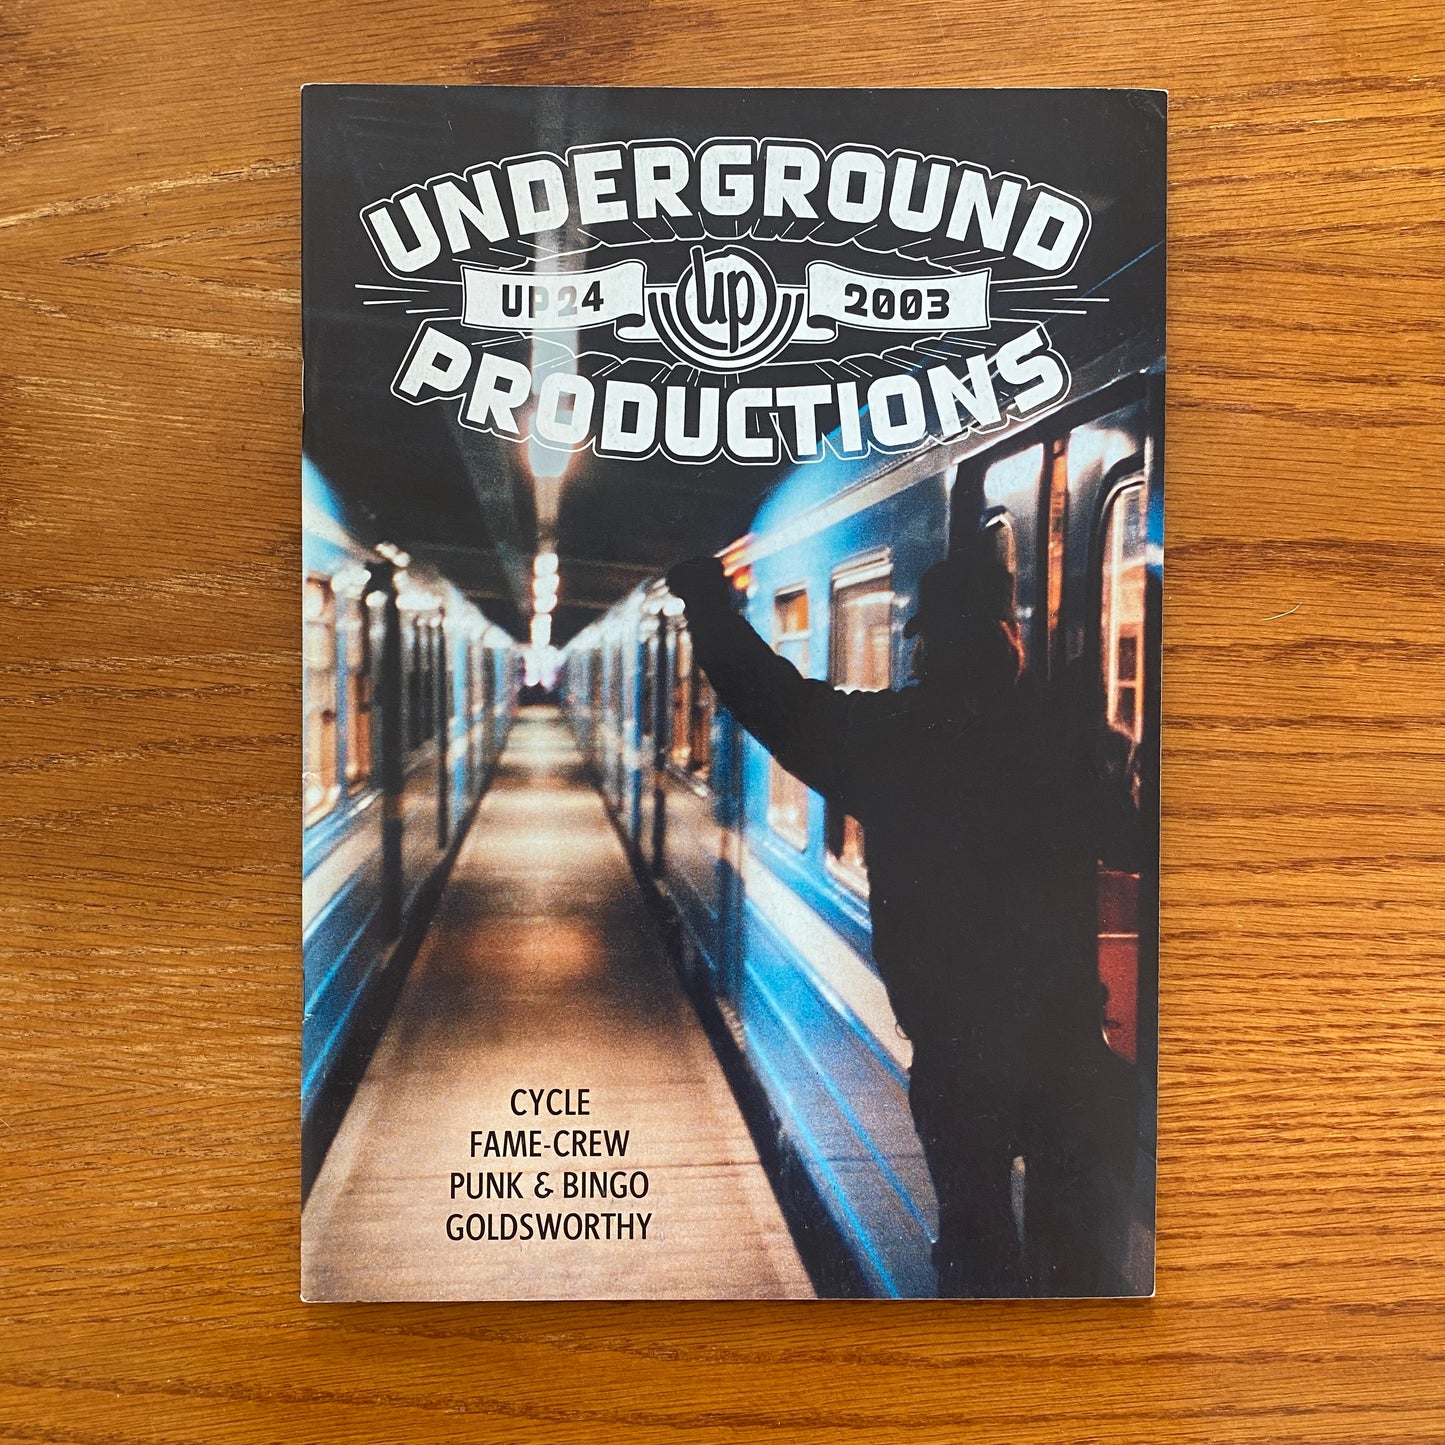 Underground Productions 24